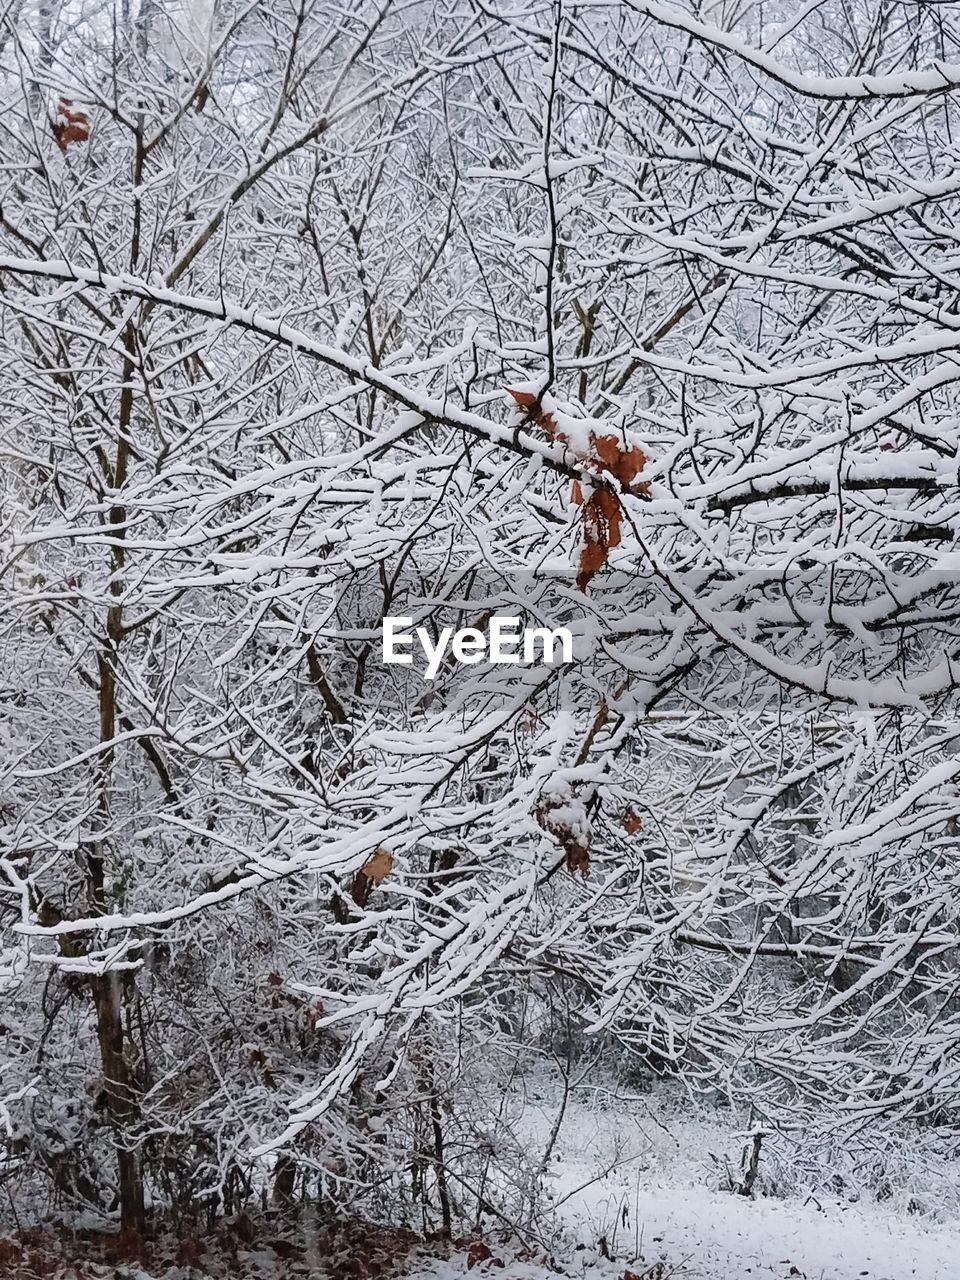 CLOSE-UP OF SNOW ON TREE